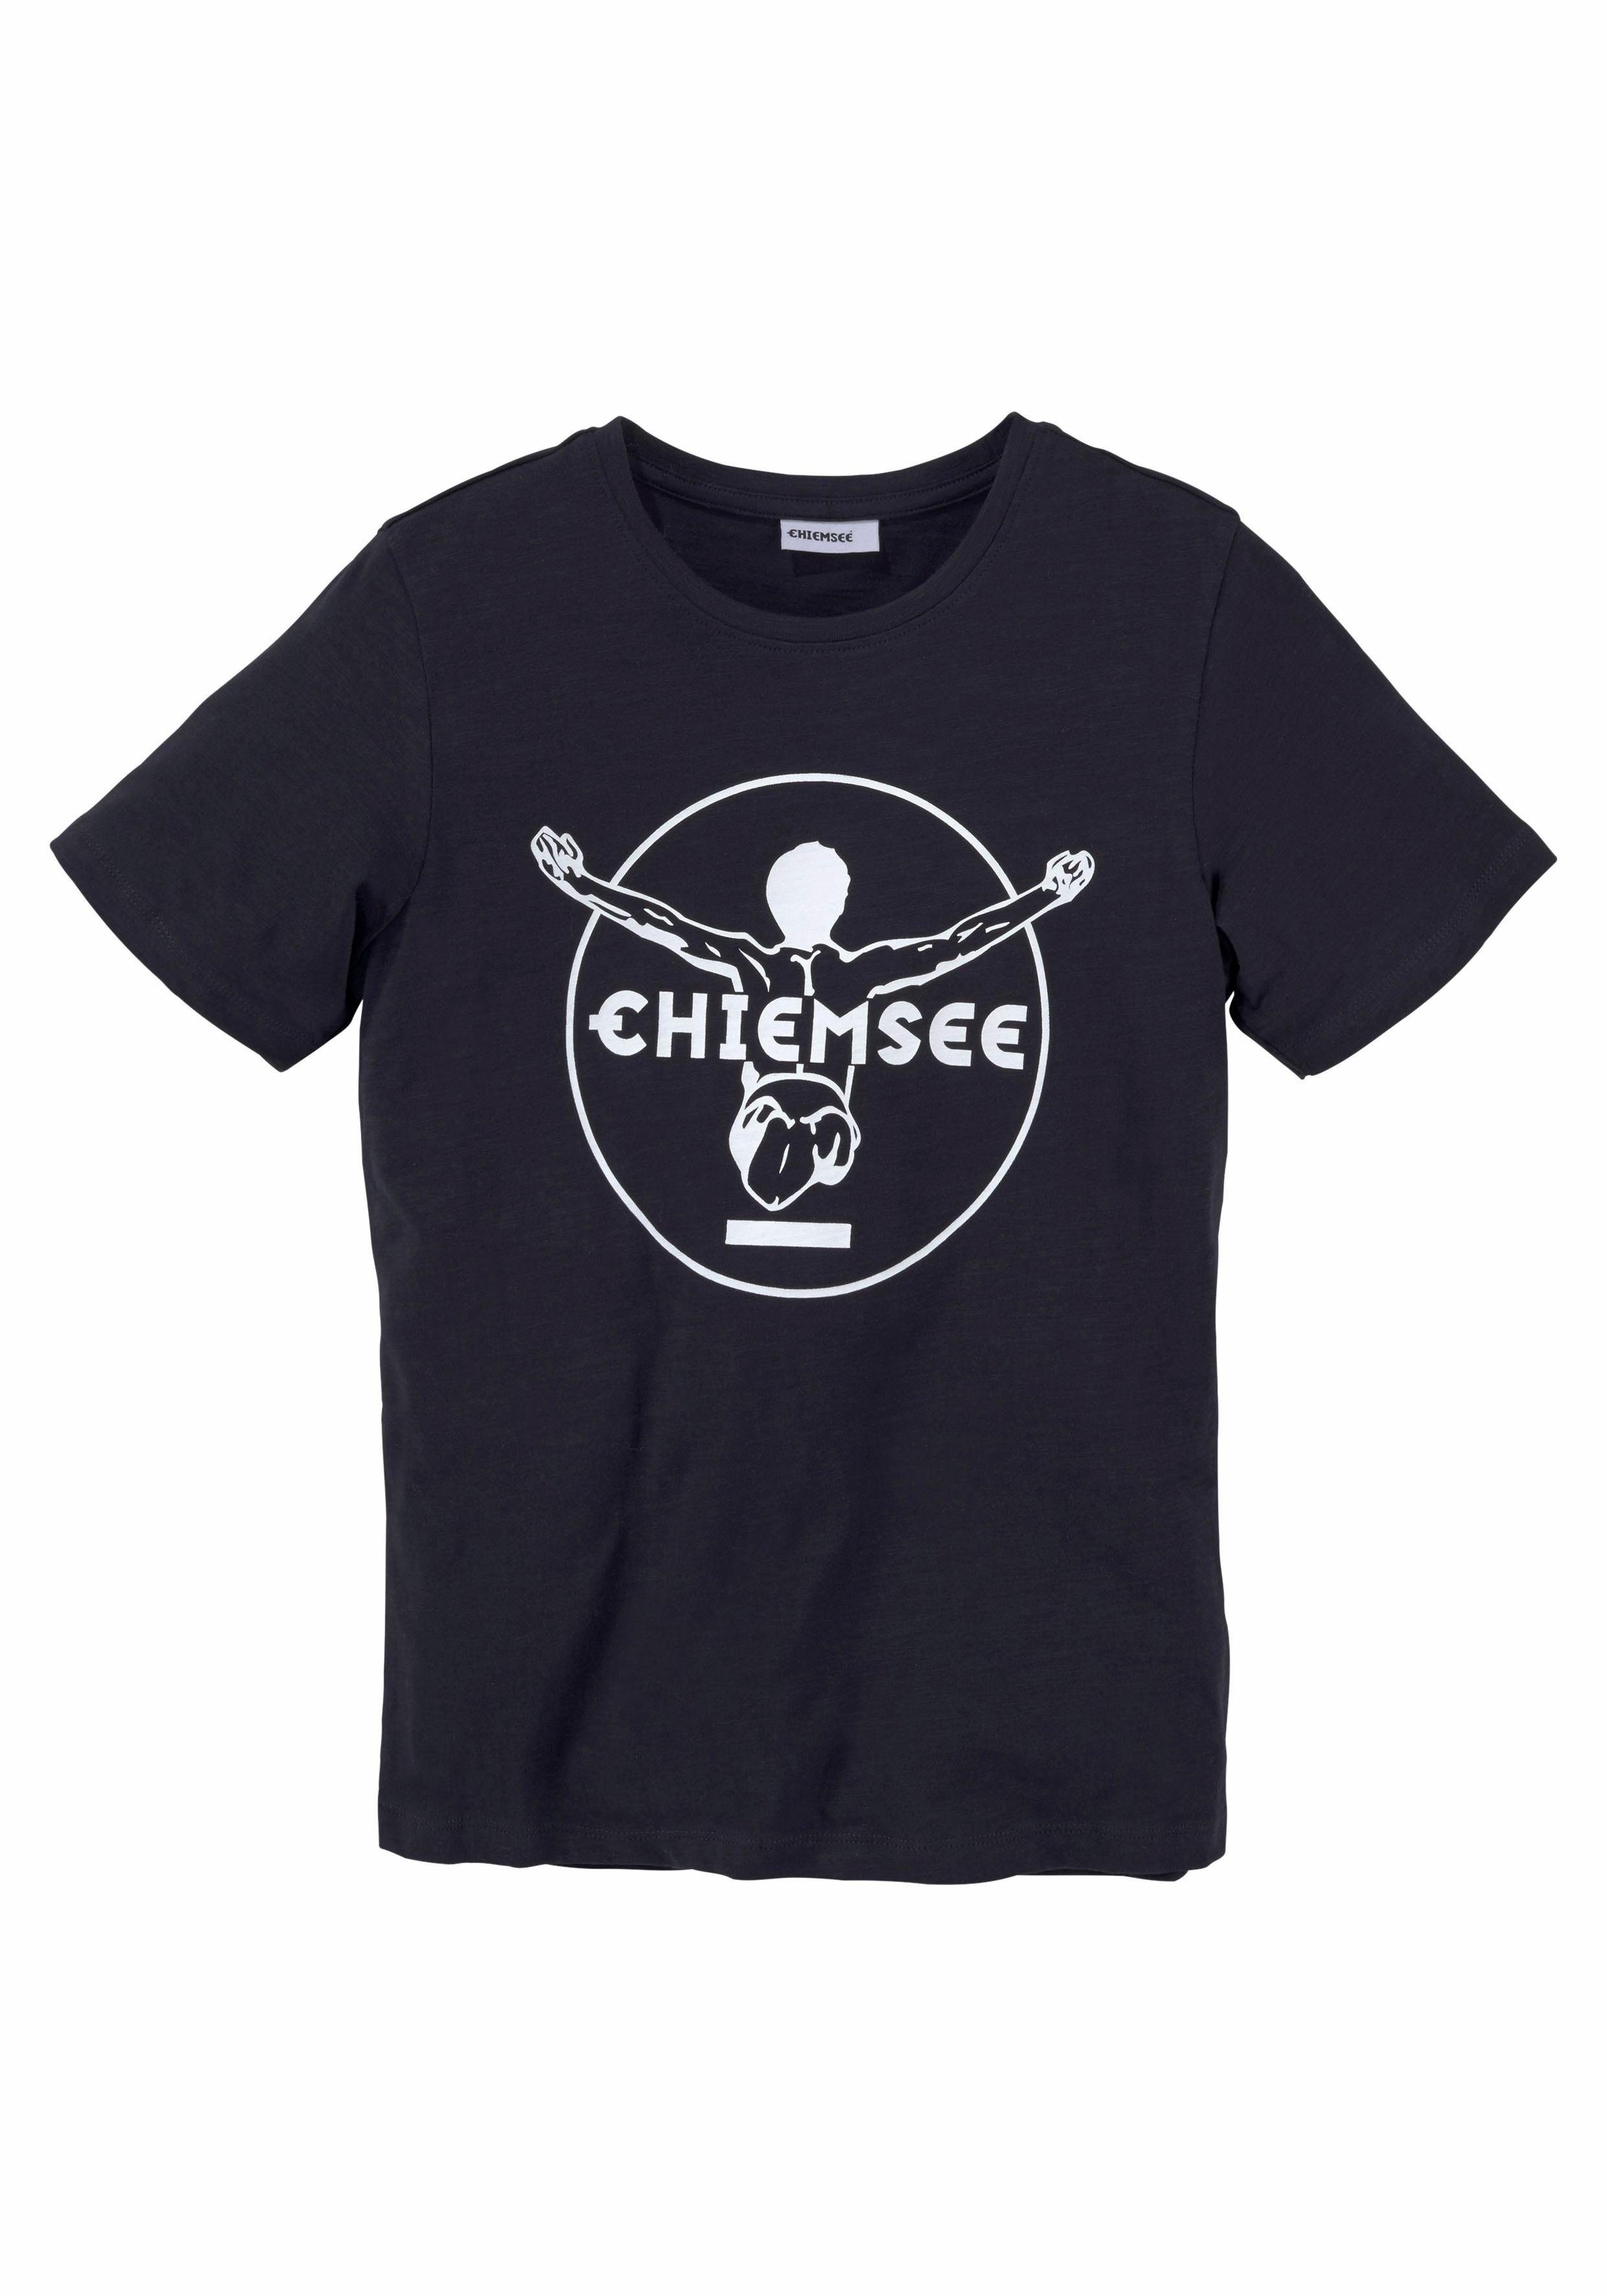 CHIEMSEE NU 15% KORTING: Chiemsee T-shirt